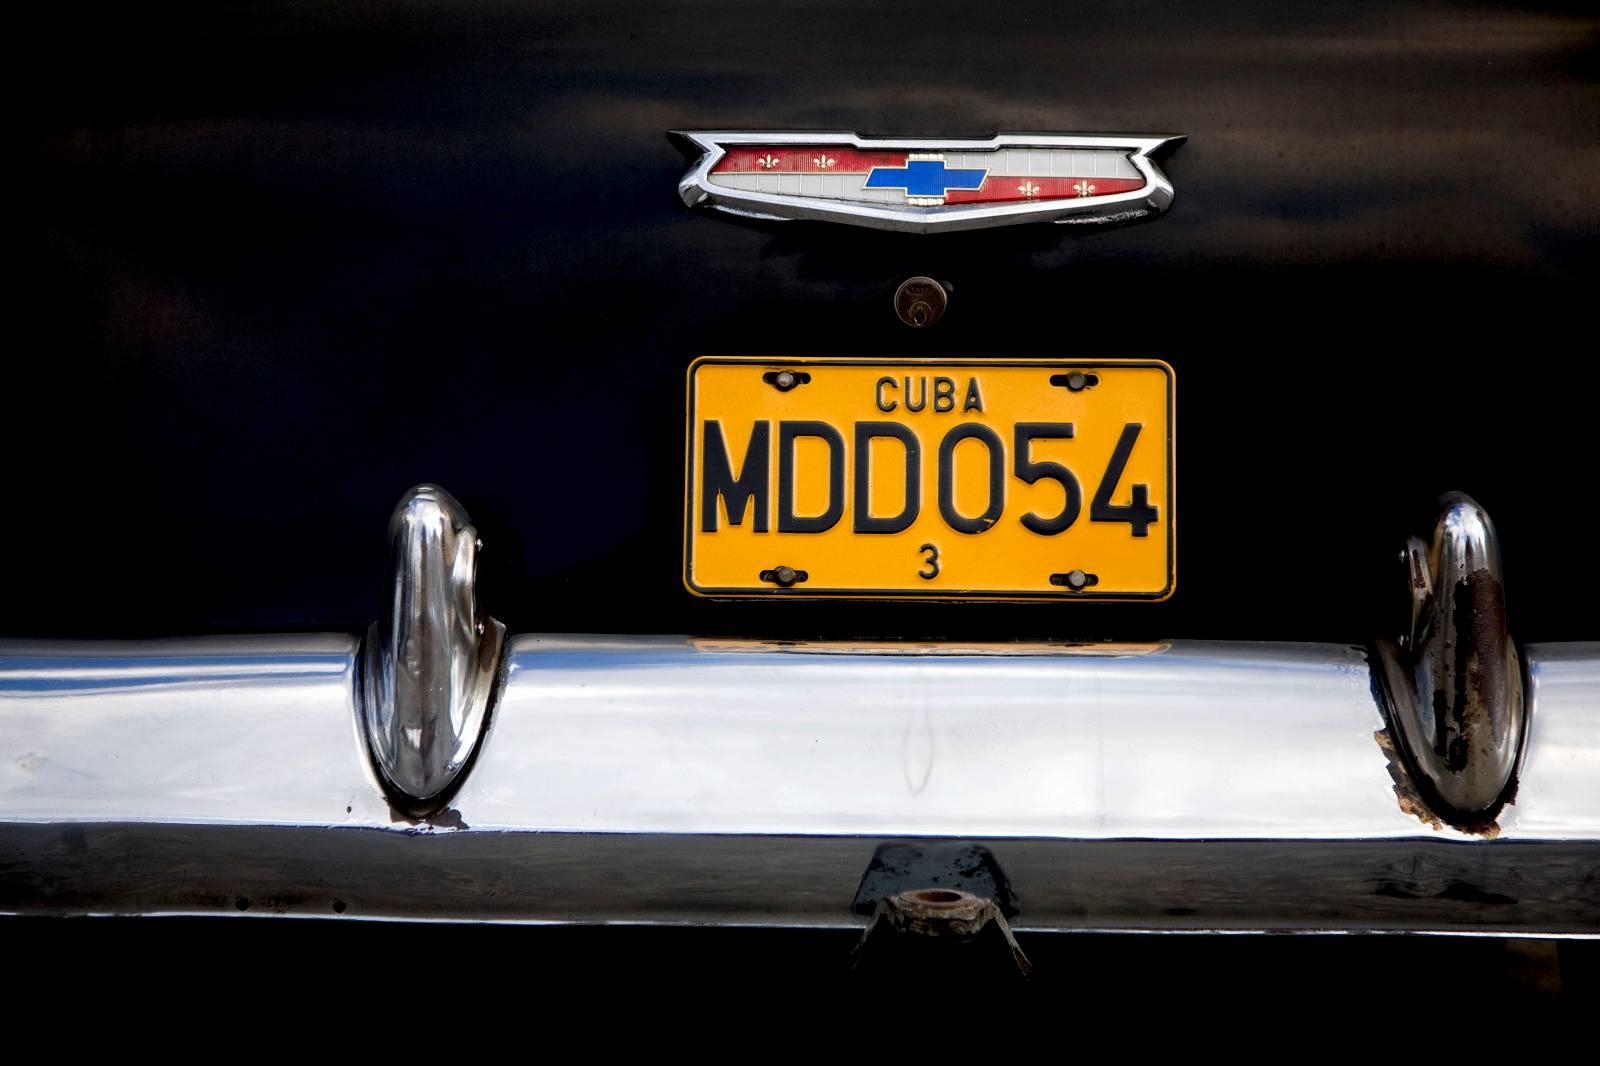 Geoff Reinhard Color Photograph - Plate #MDD054 - Cuba	